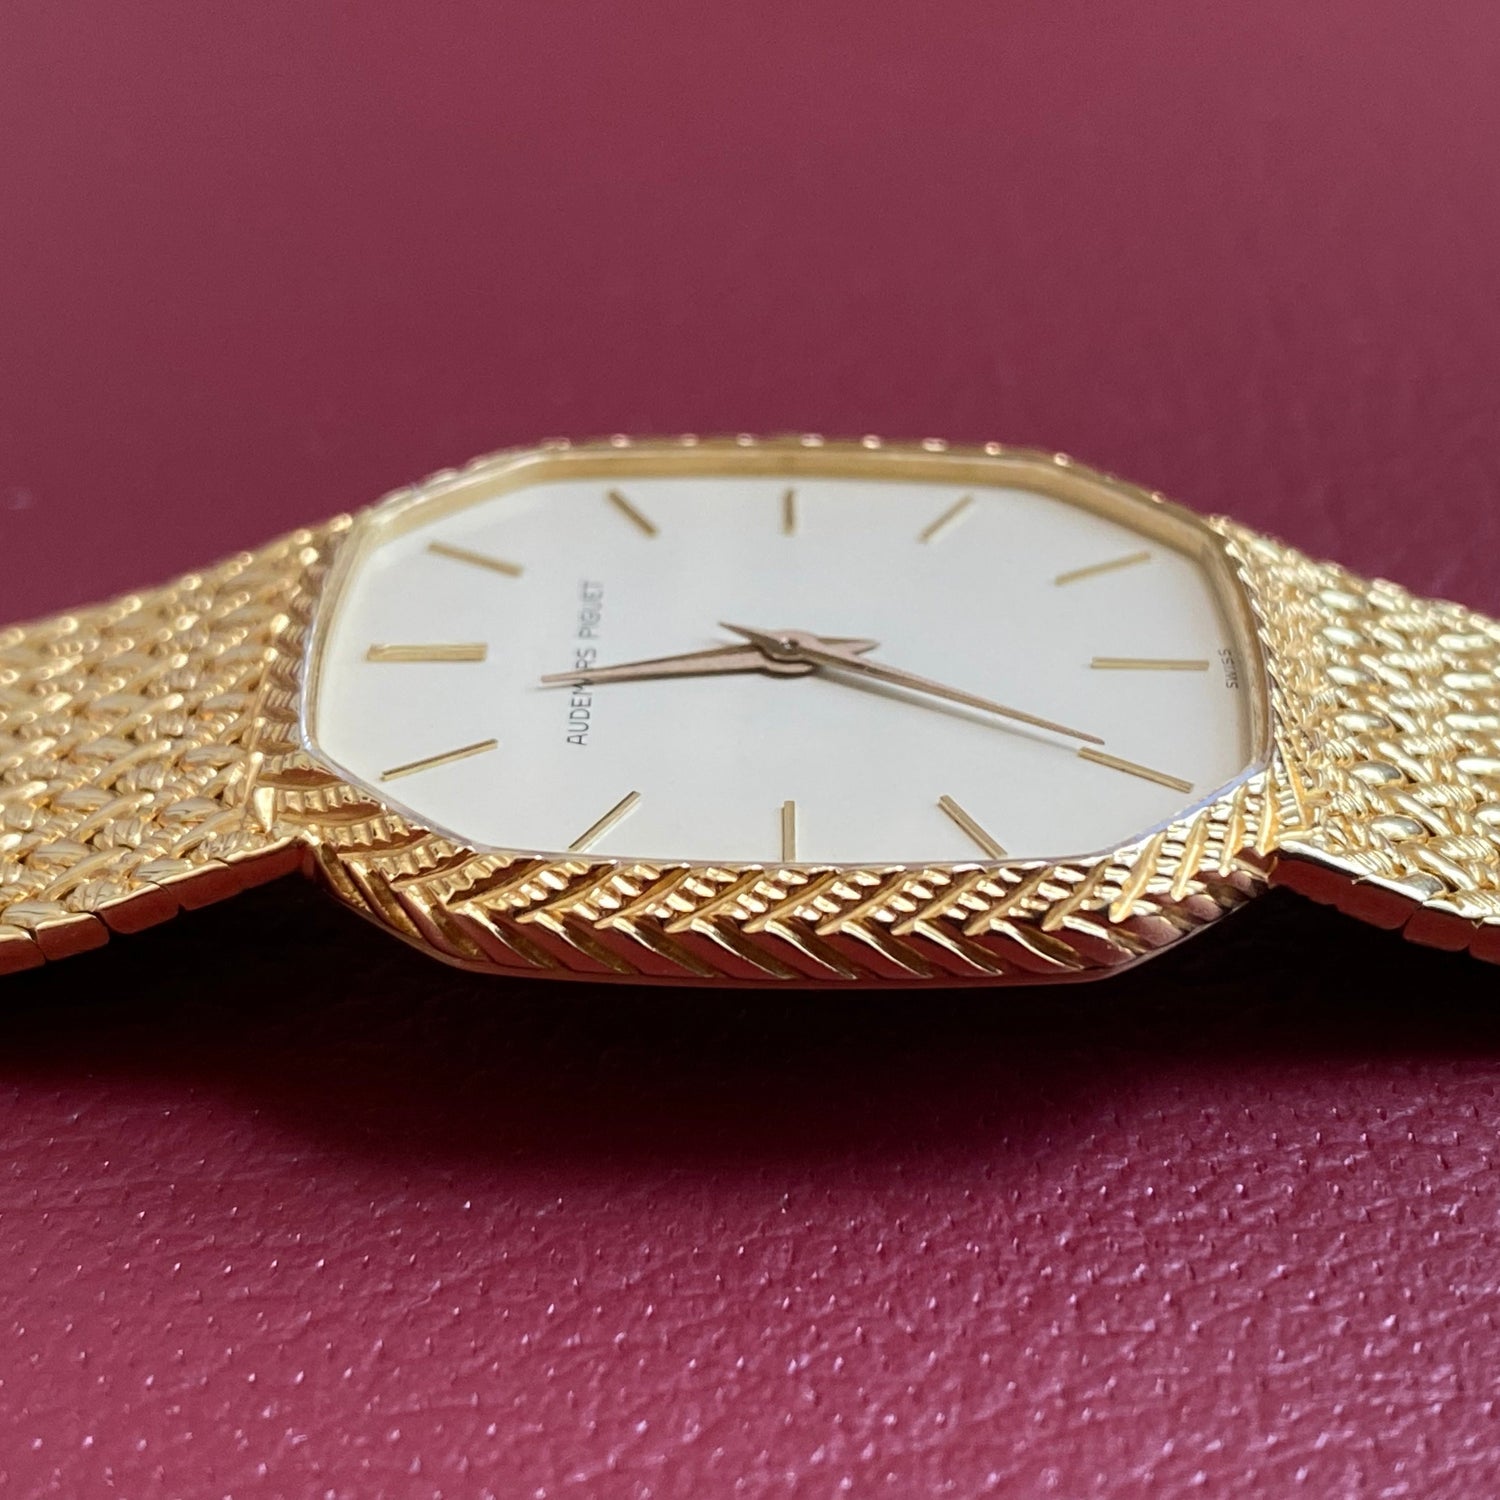 Audemars Piguet Octagonal 18K YG Vintage Watch - PM Vintage Watches - Audemars Piguet